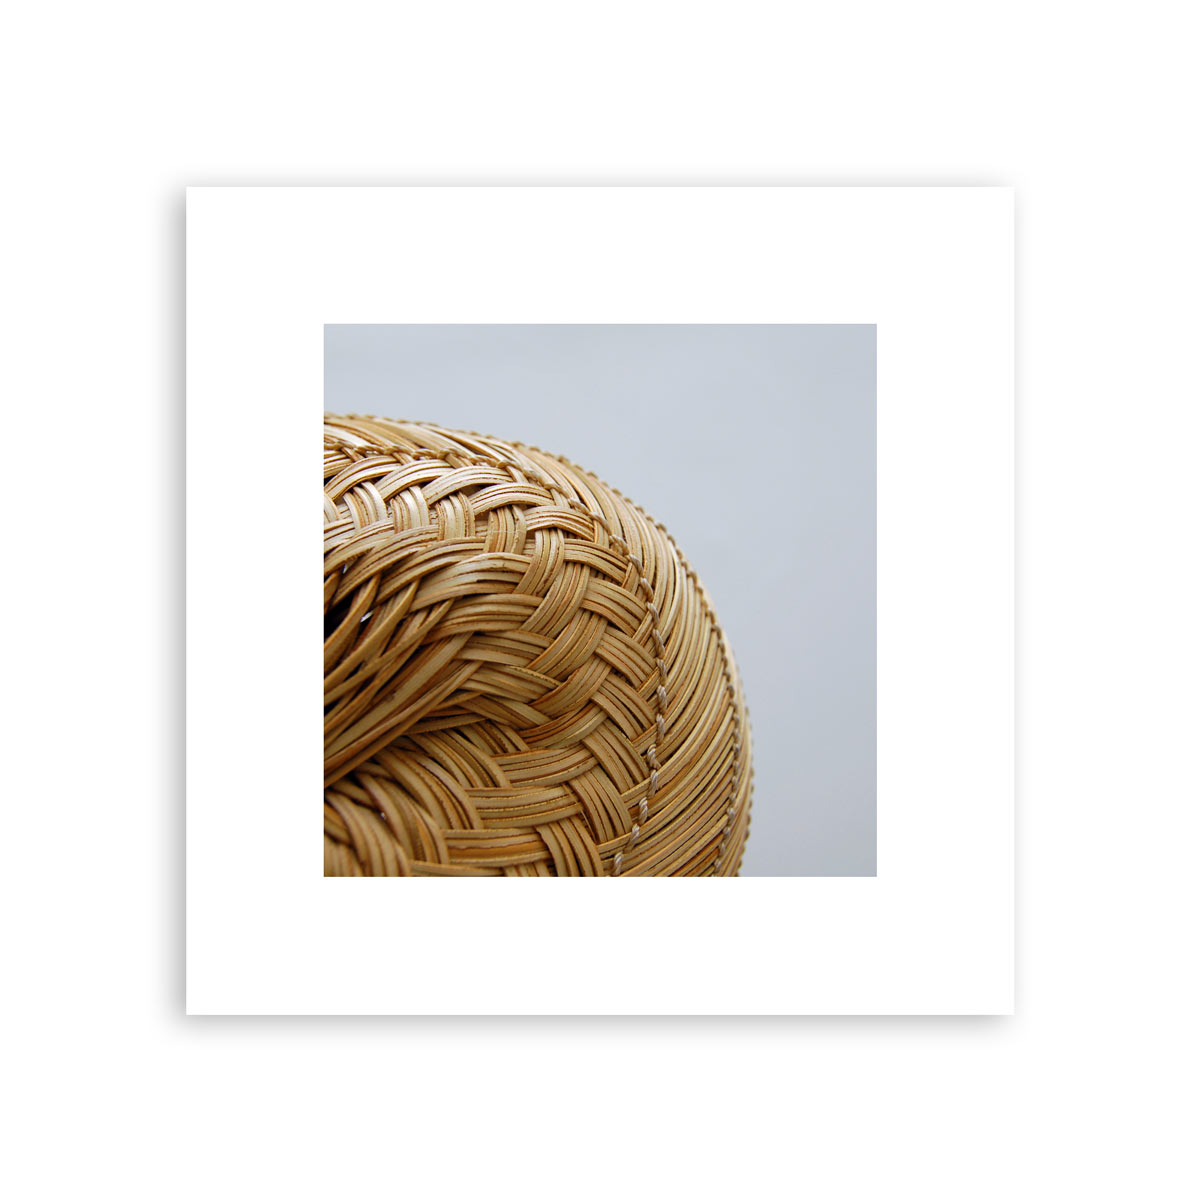 Rustic Basket – photographic print